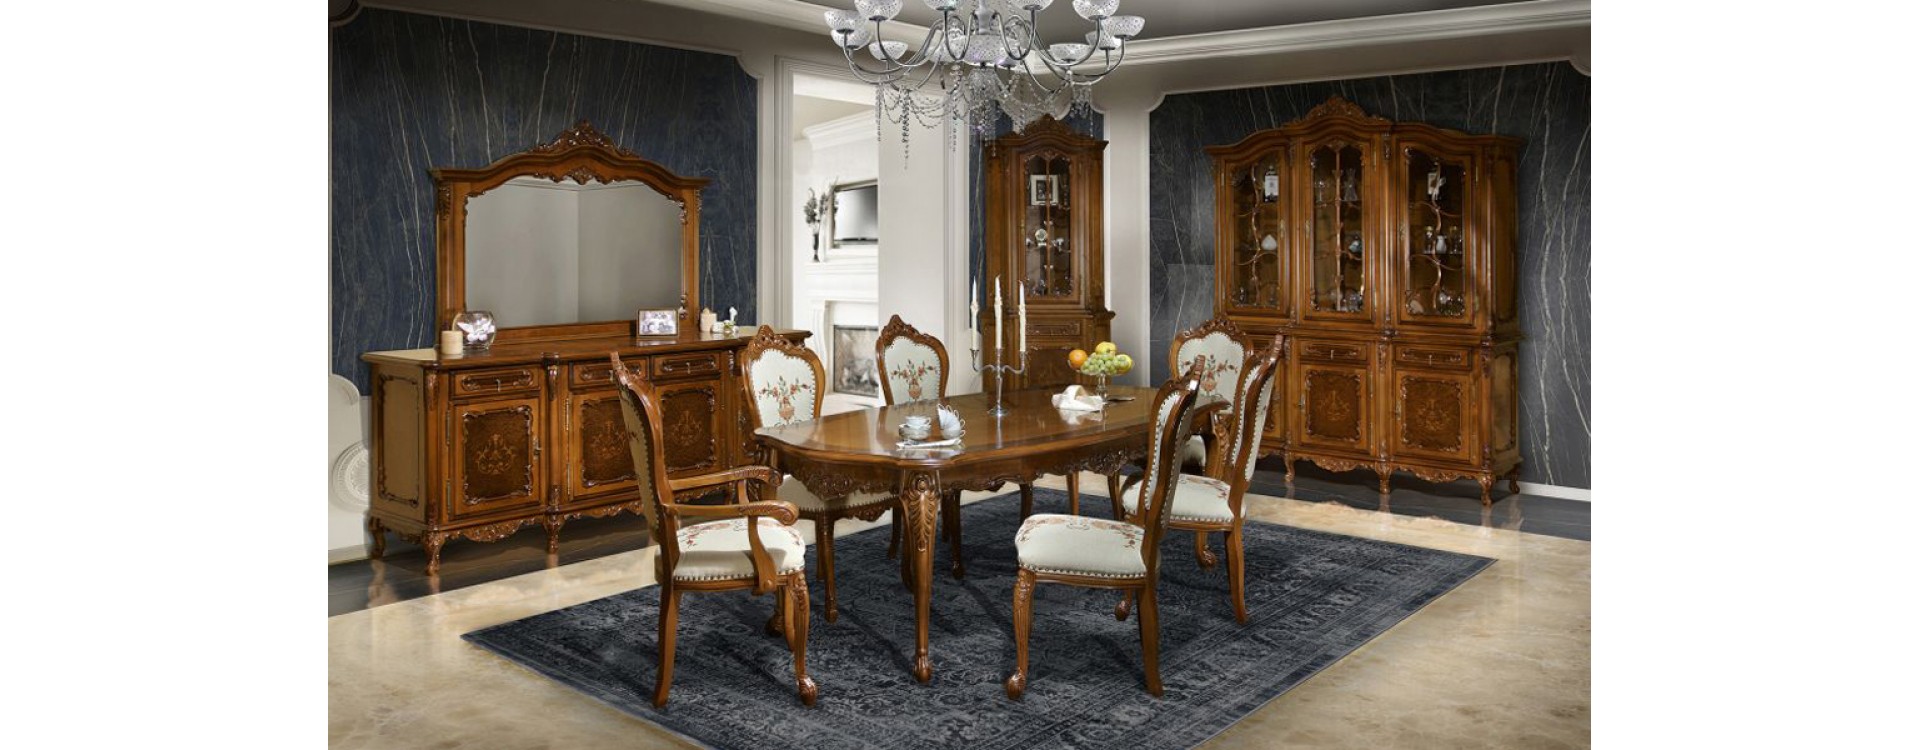 Romanian furniture